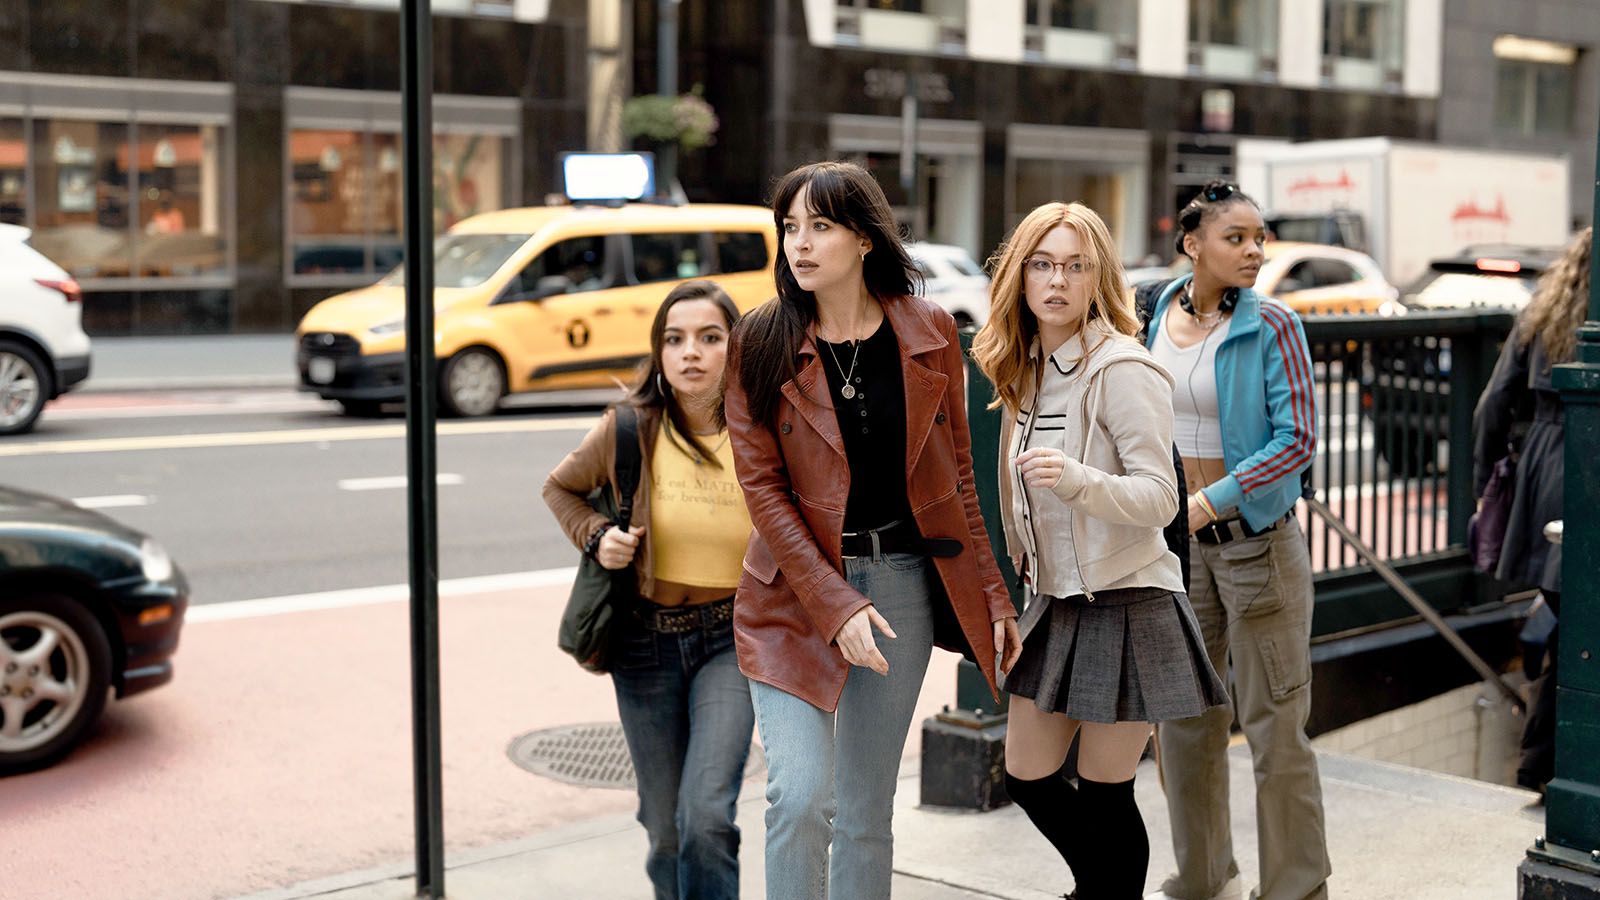 The new superhero film Madame Web stars, from left, Isabela Merced, Dakota Johnson, Sydney Sweeney, and Celeste O’Connor.